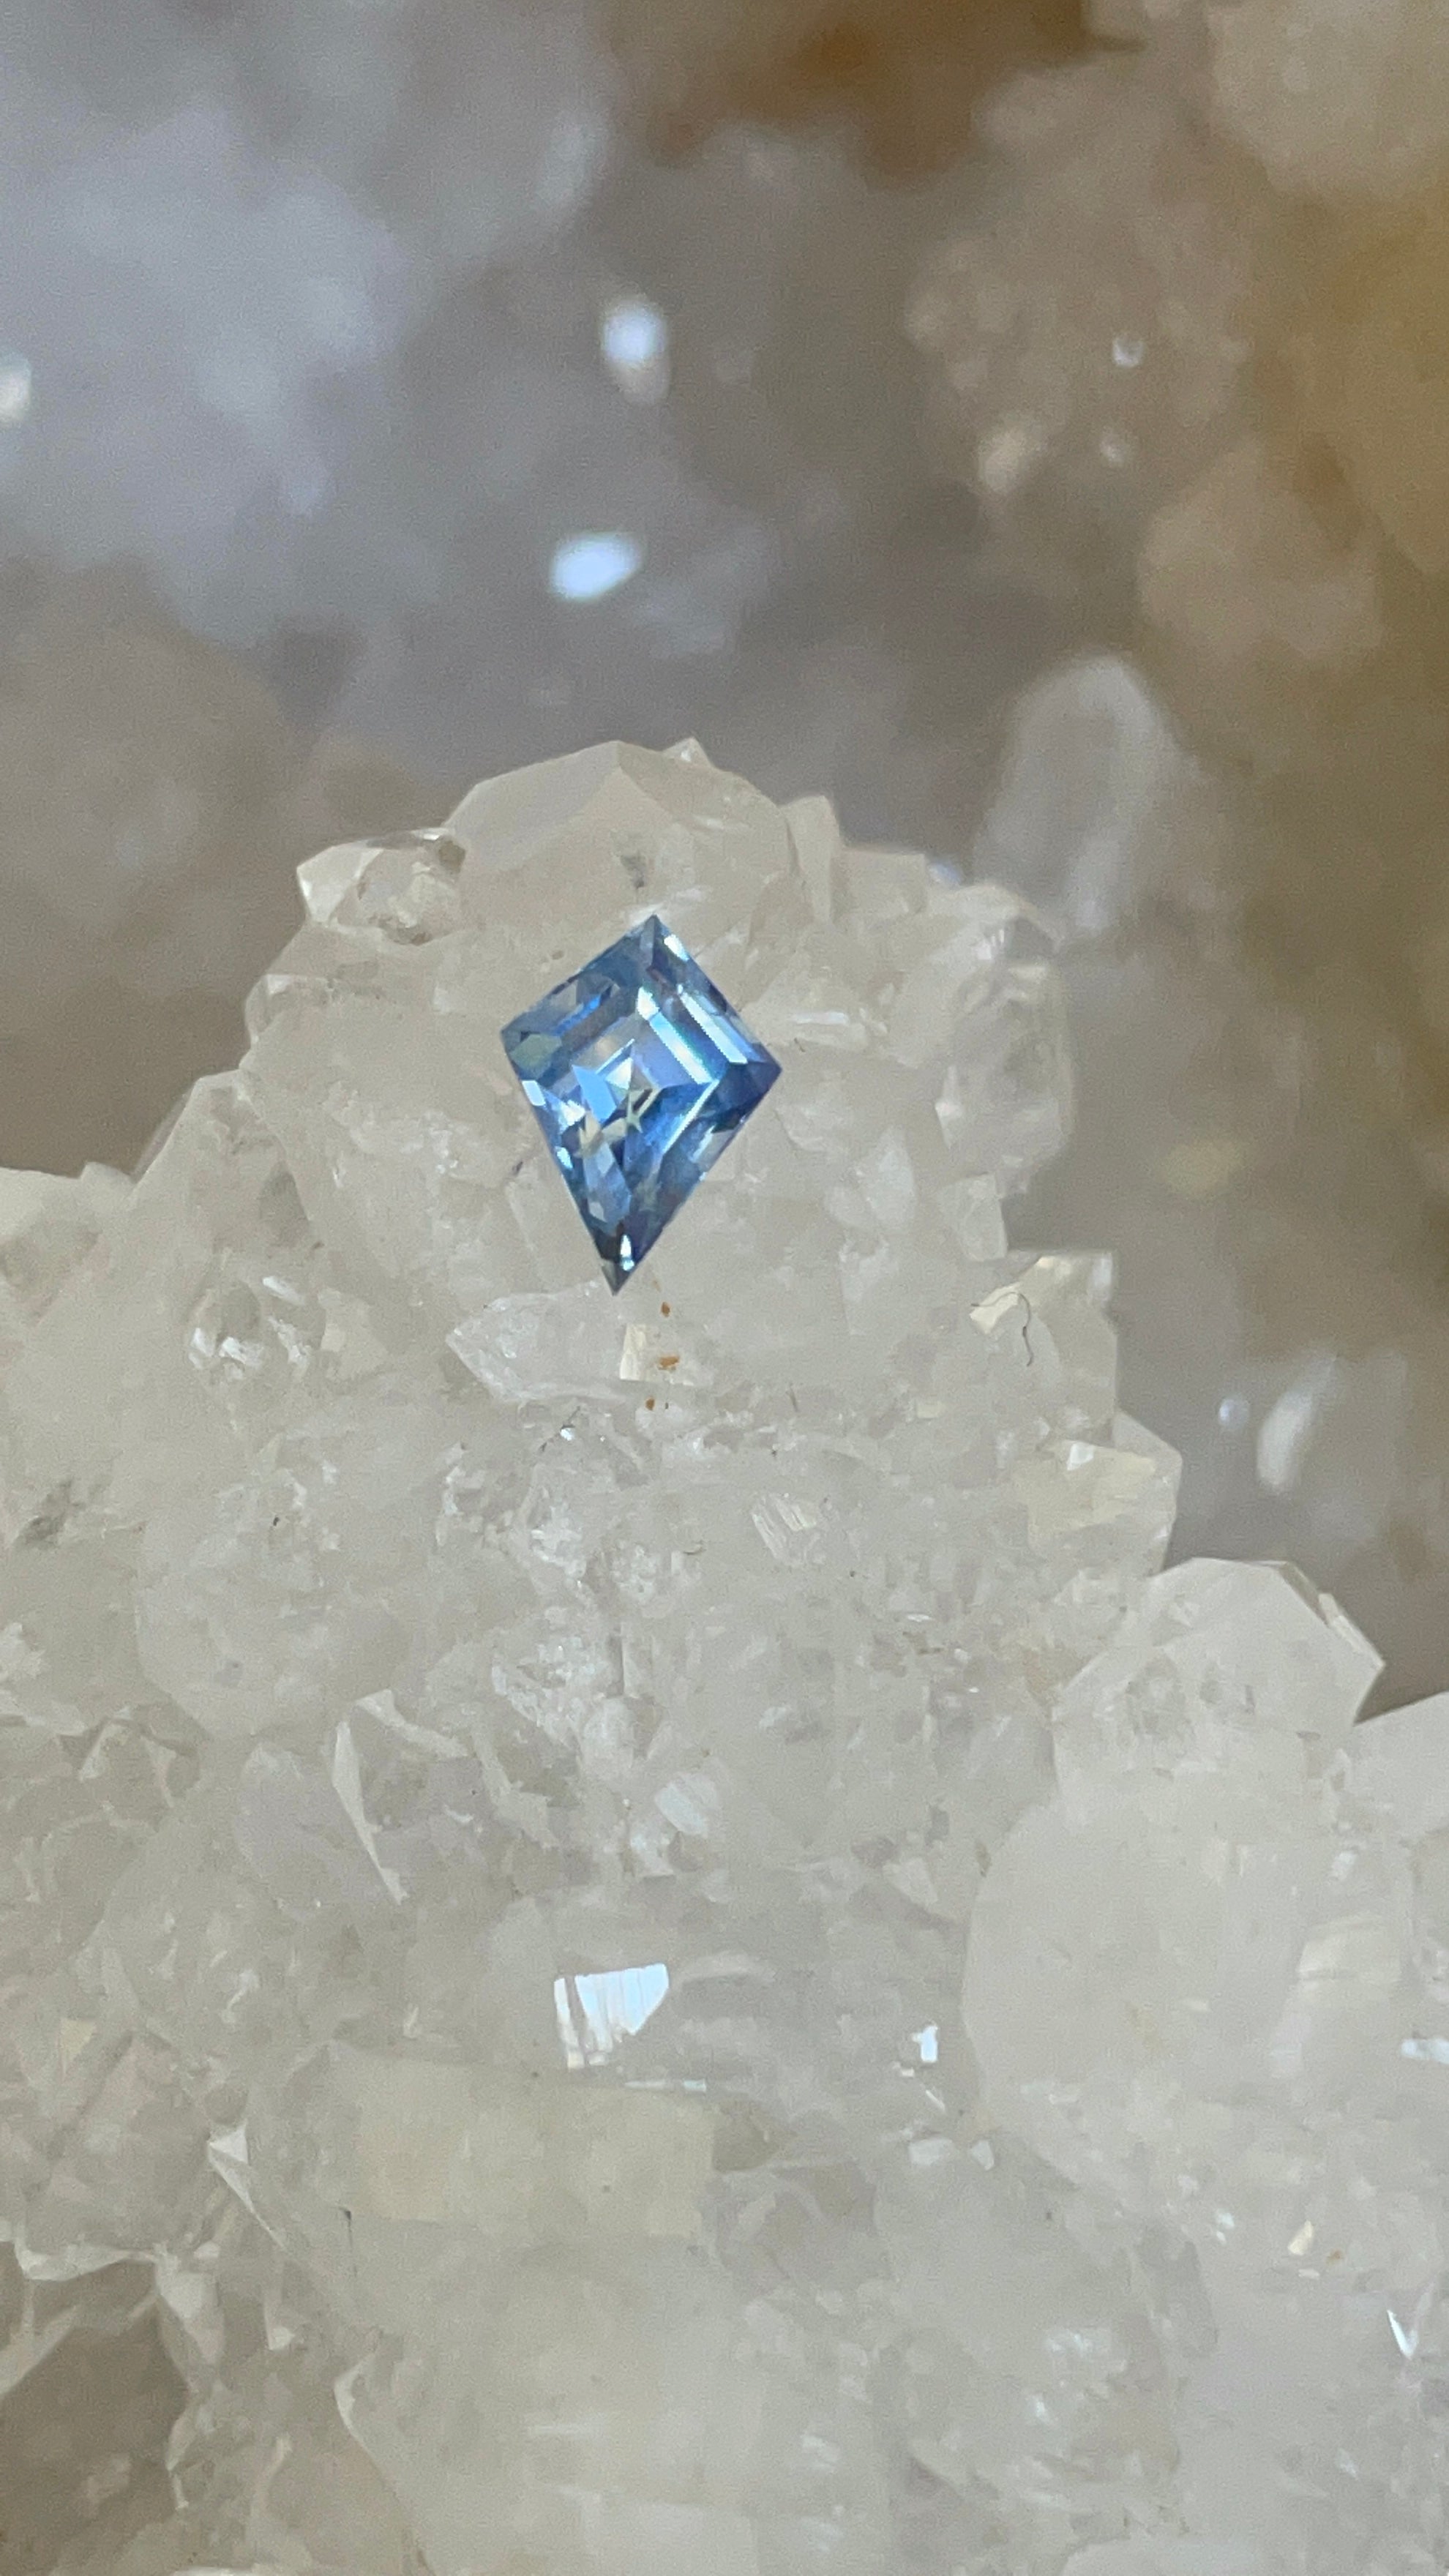 Montana Sapphire .86 CT Light Baby Blue to Lavender Kite Cut